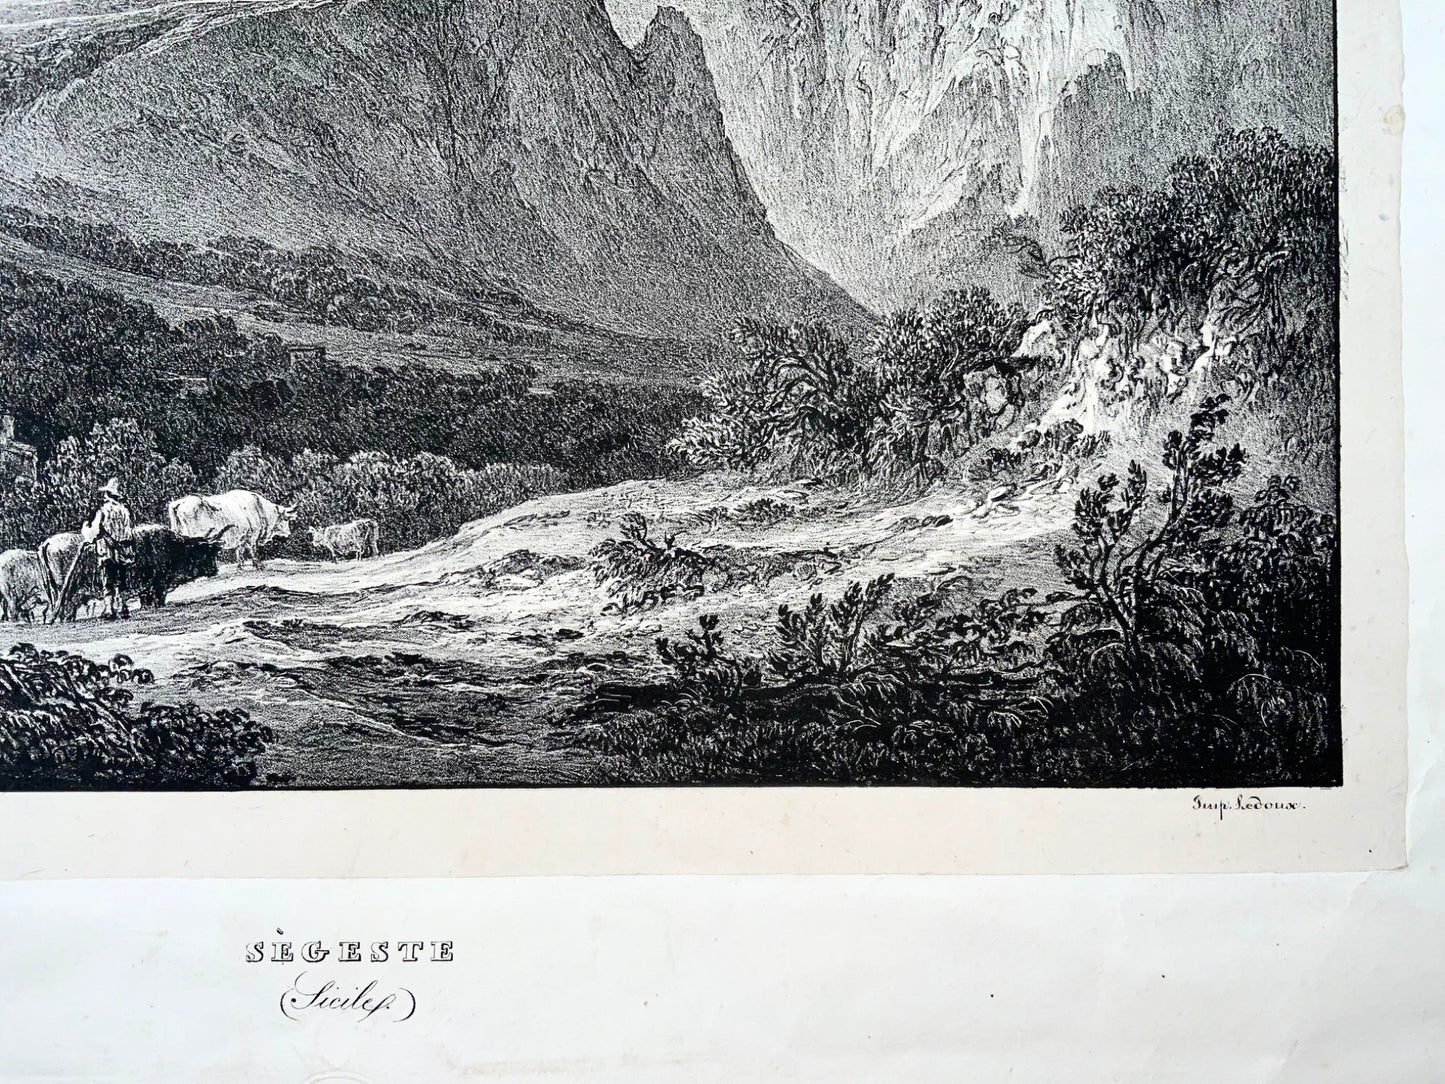 1833 Segesta Sicilia, Muller &amp; Horner, Ledoux sc., grande litografia su pietra